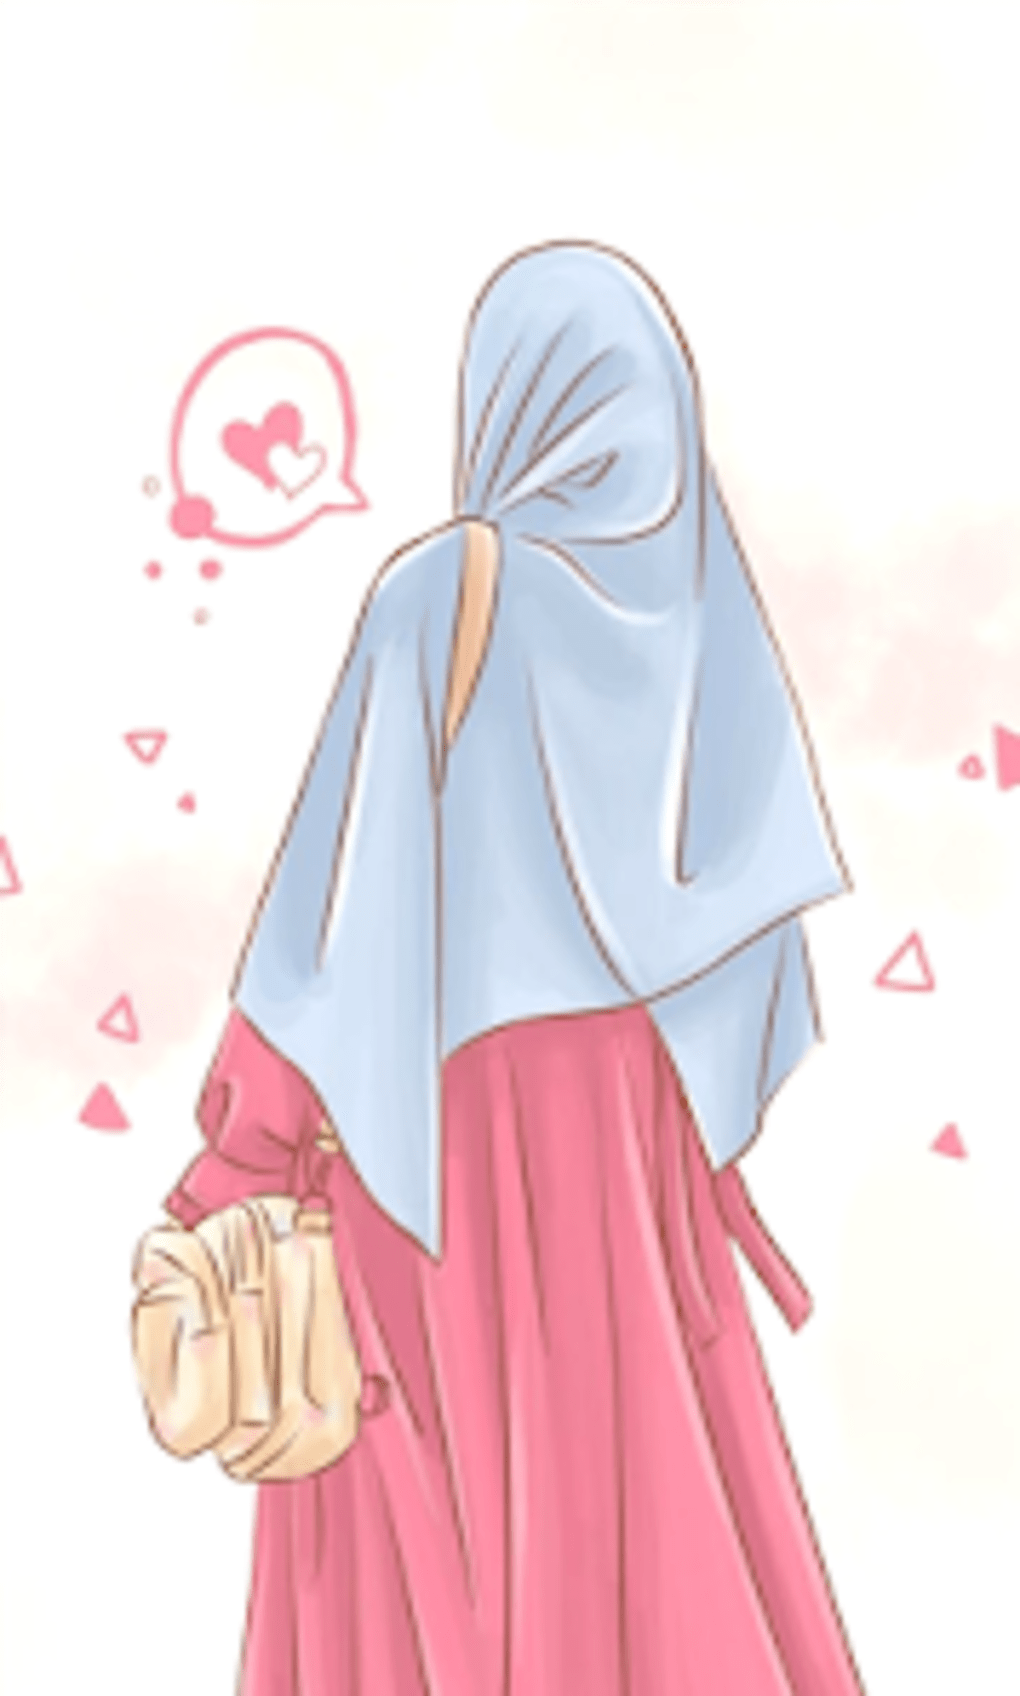 23126 Hijab Girls Cartoon Images Stock Photos  Vectors  Shutterstock